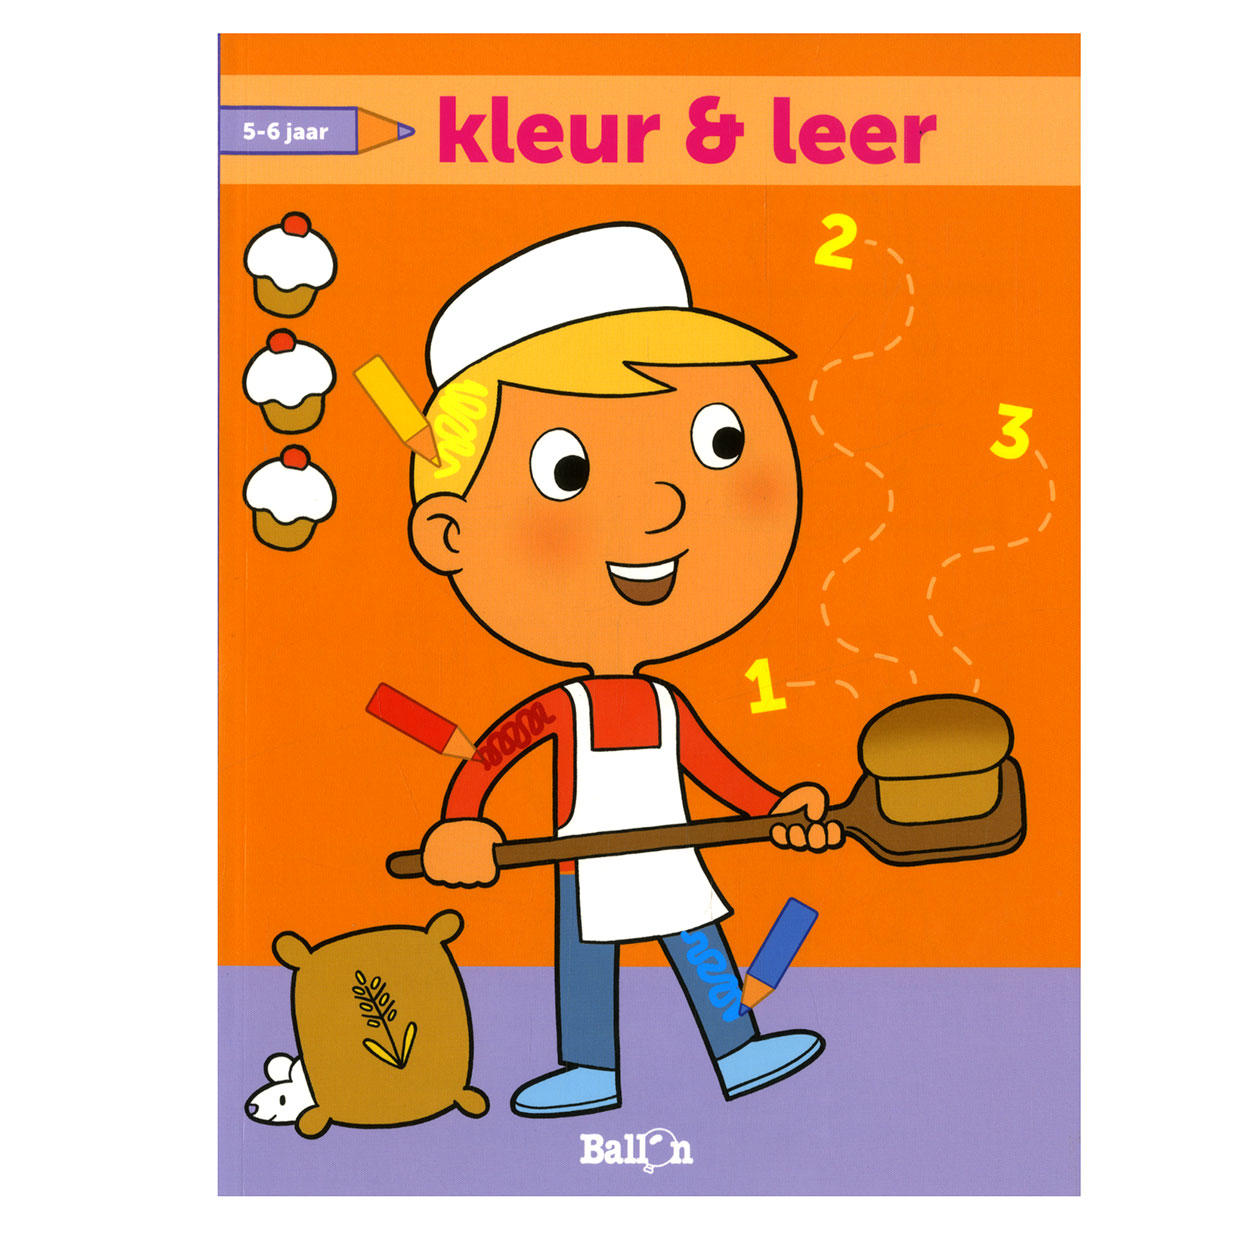 Kleur en leer Bakker (5-6 jaar)